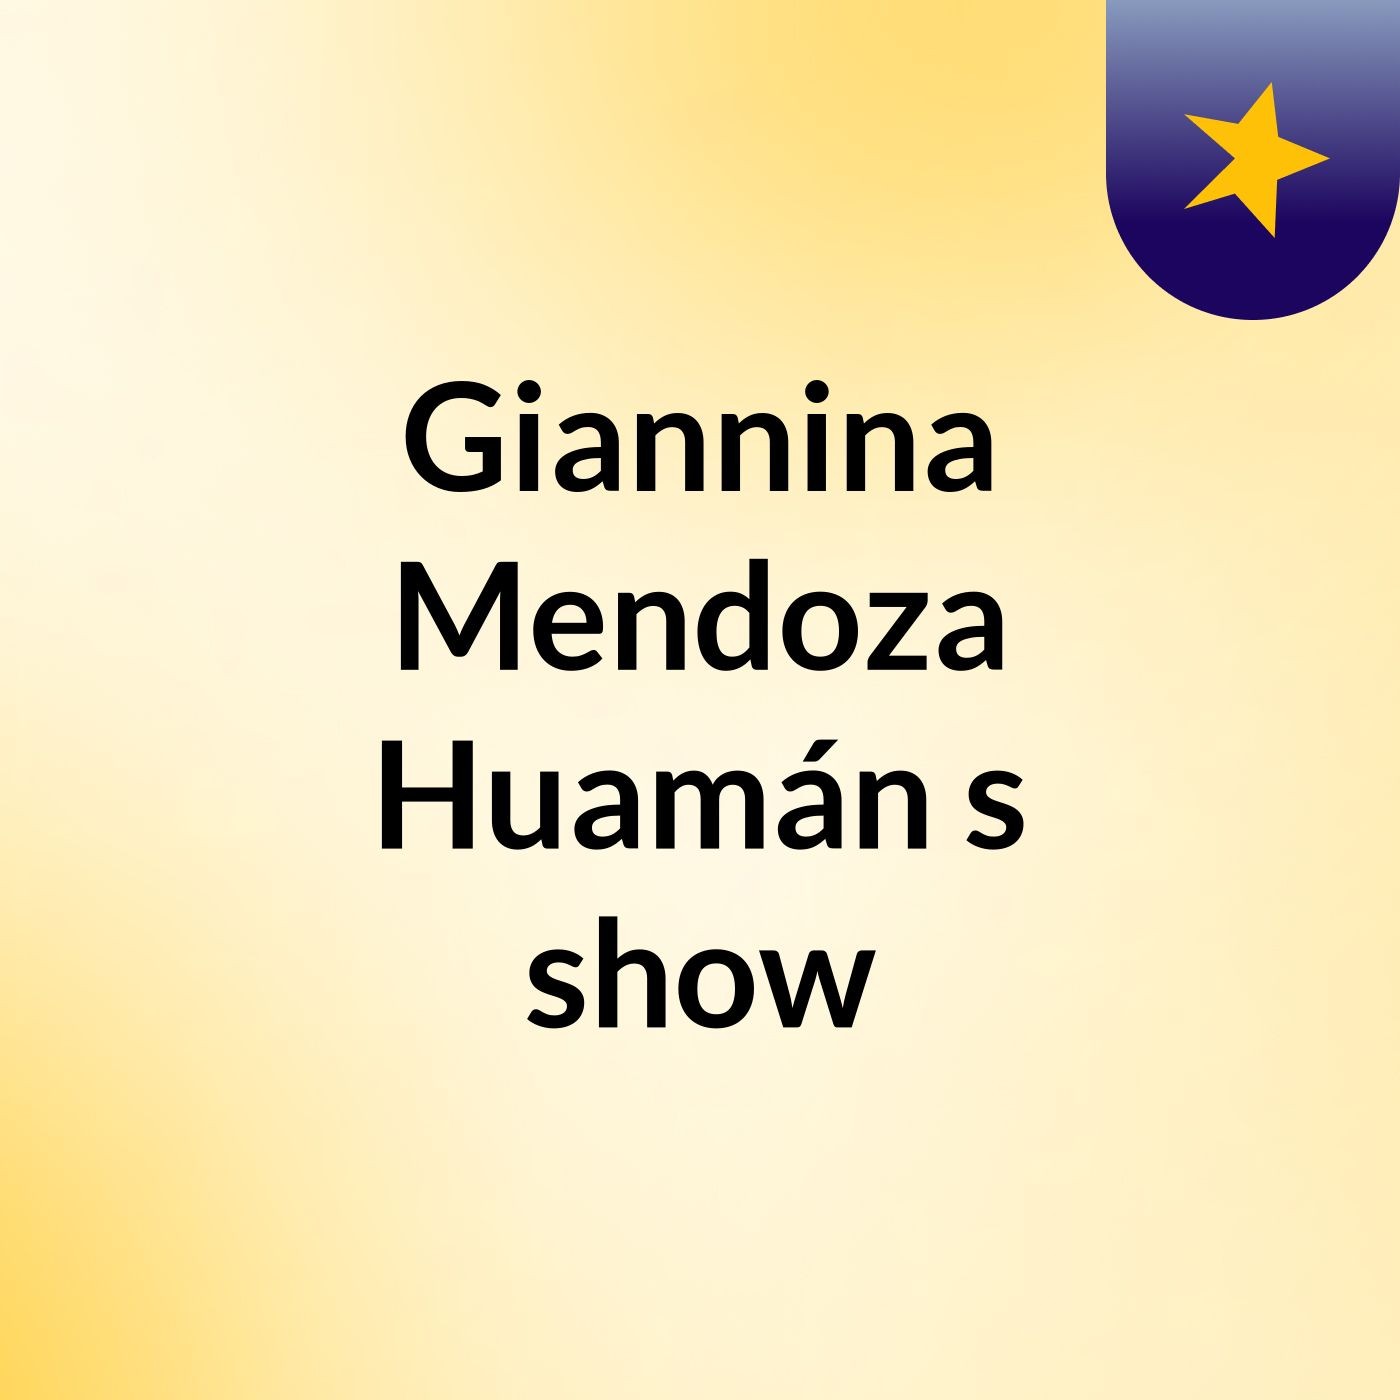 Giannina Mendoza Huamán's show